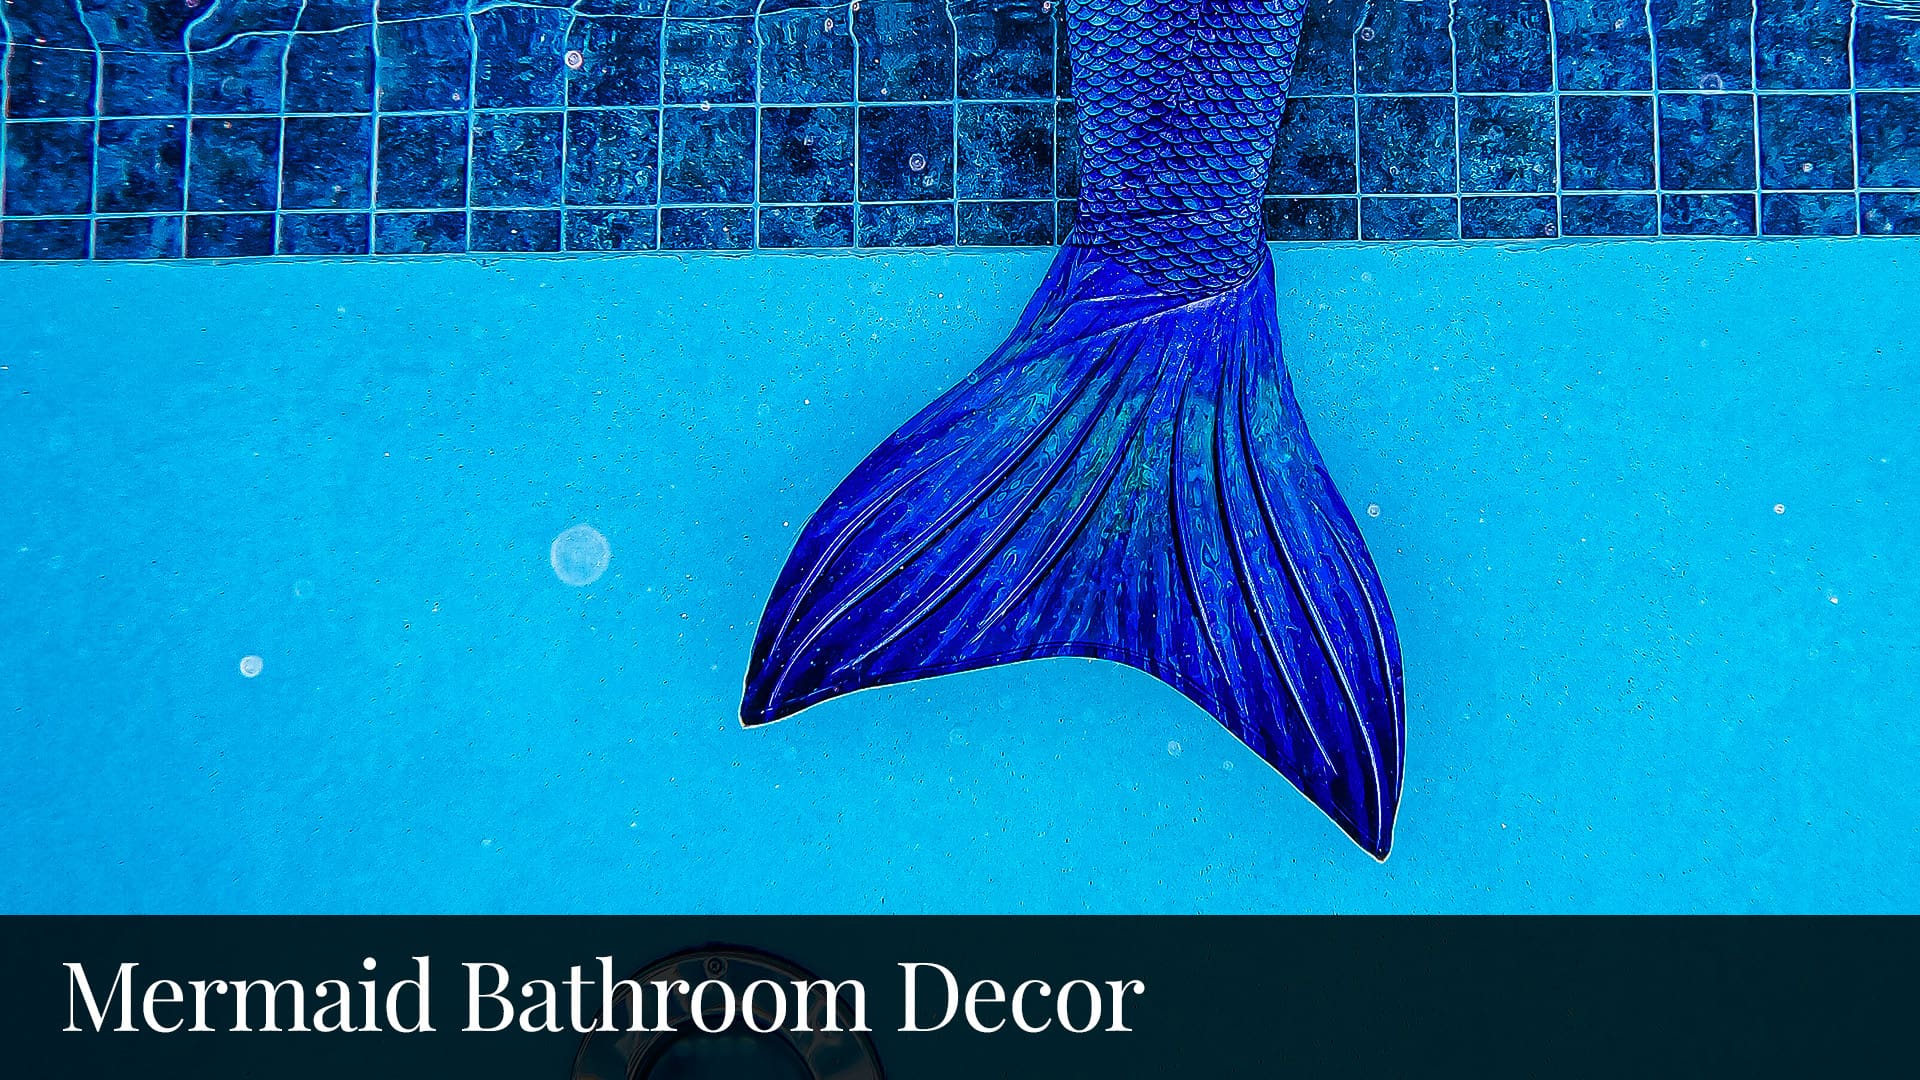 Mermaid Bathroom Decor Bluebombay.com